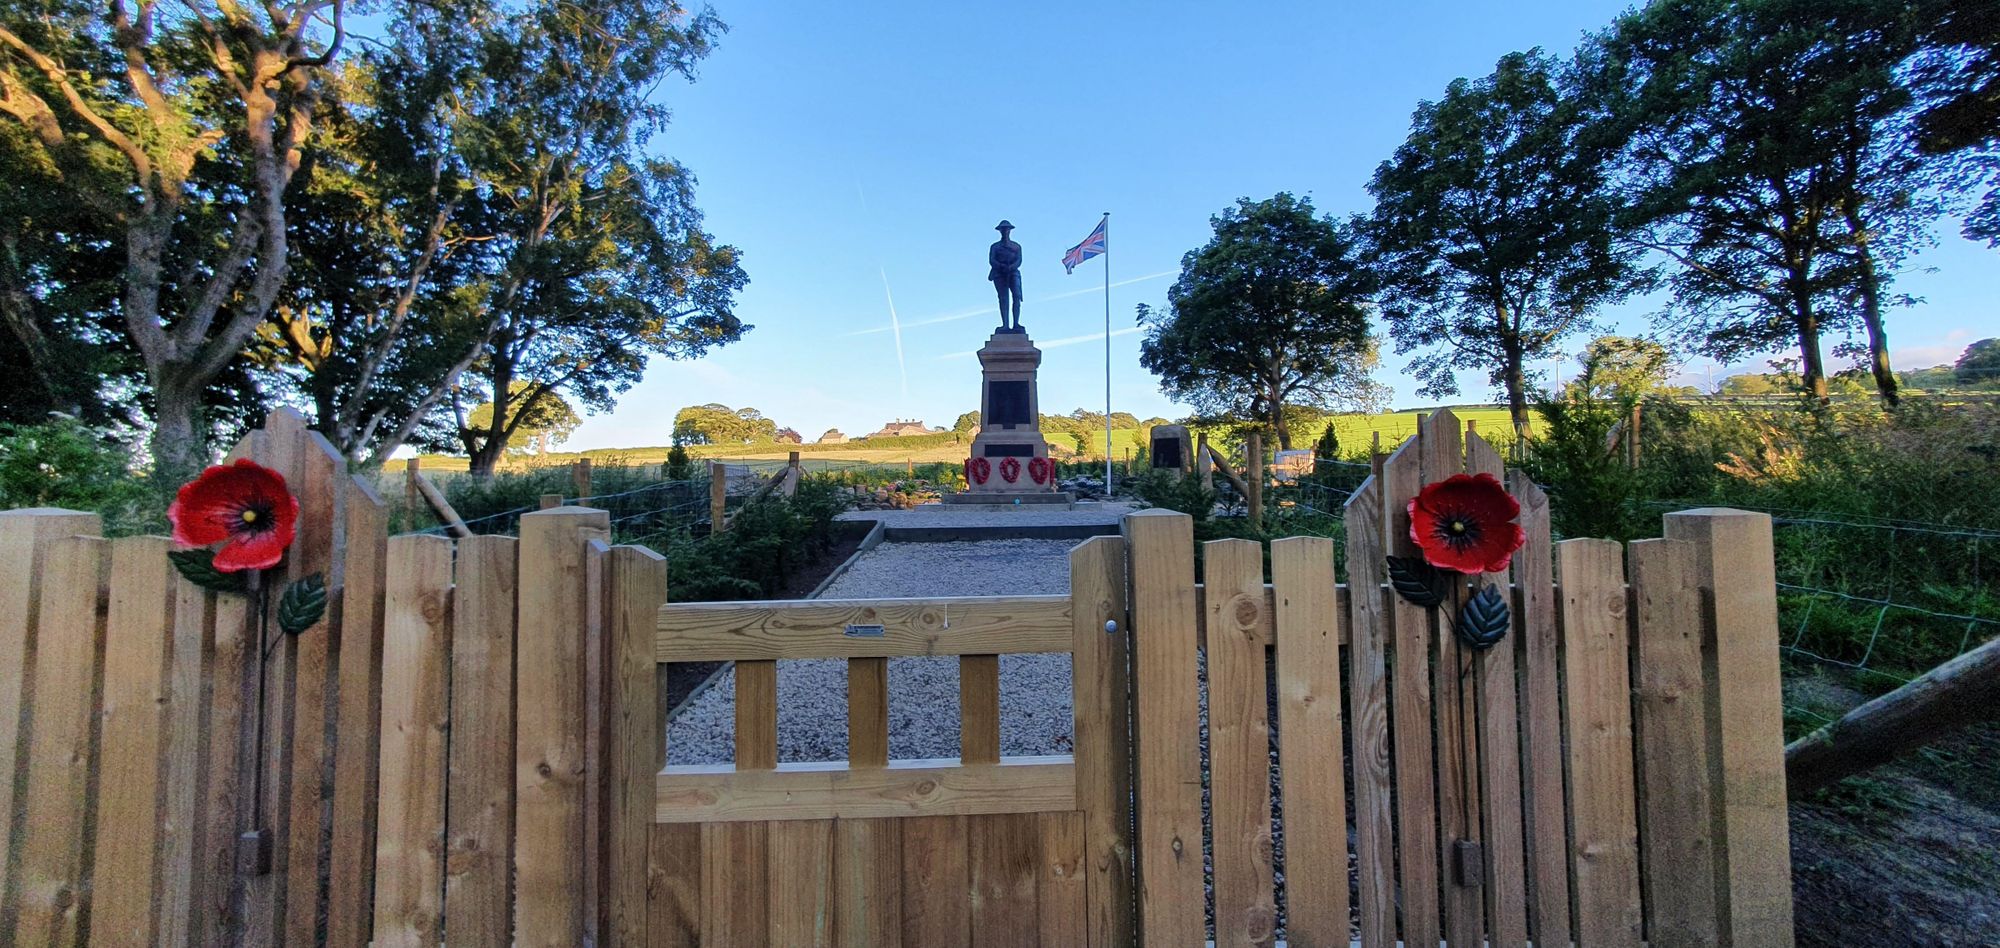 A renewed war memorial and woodlands at Shepley